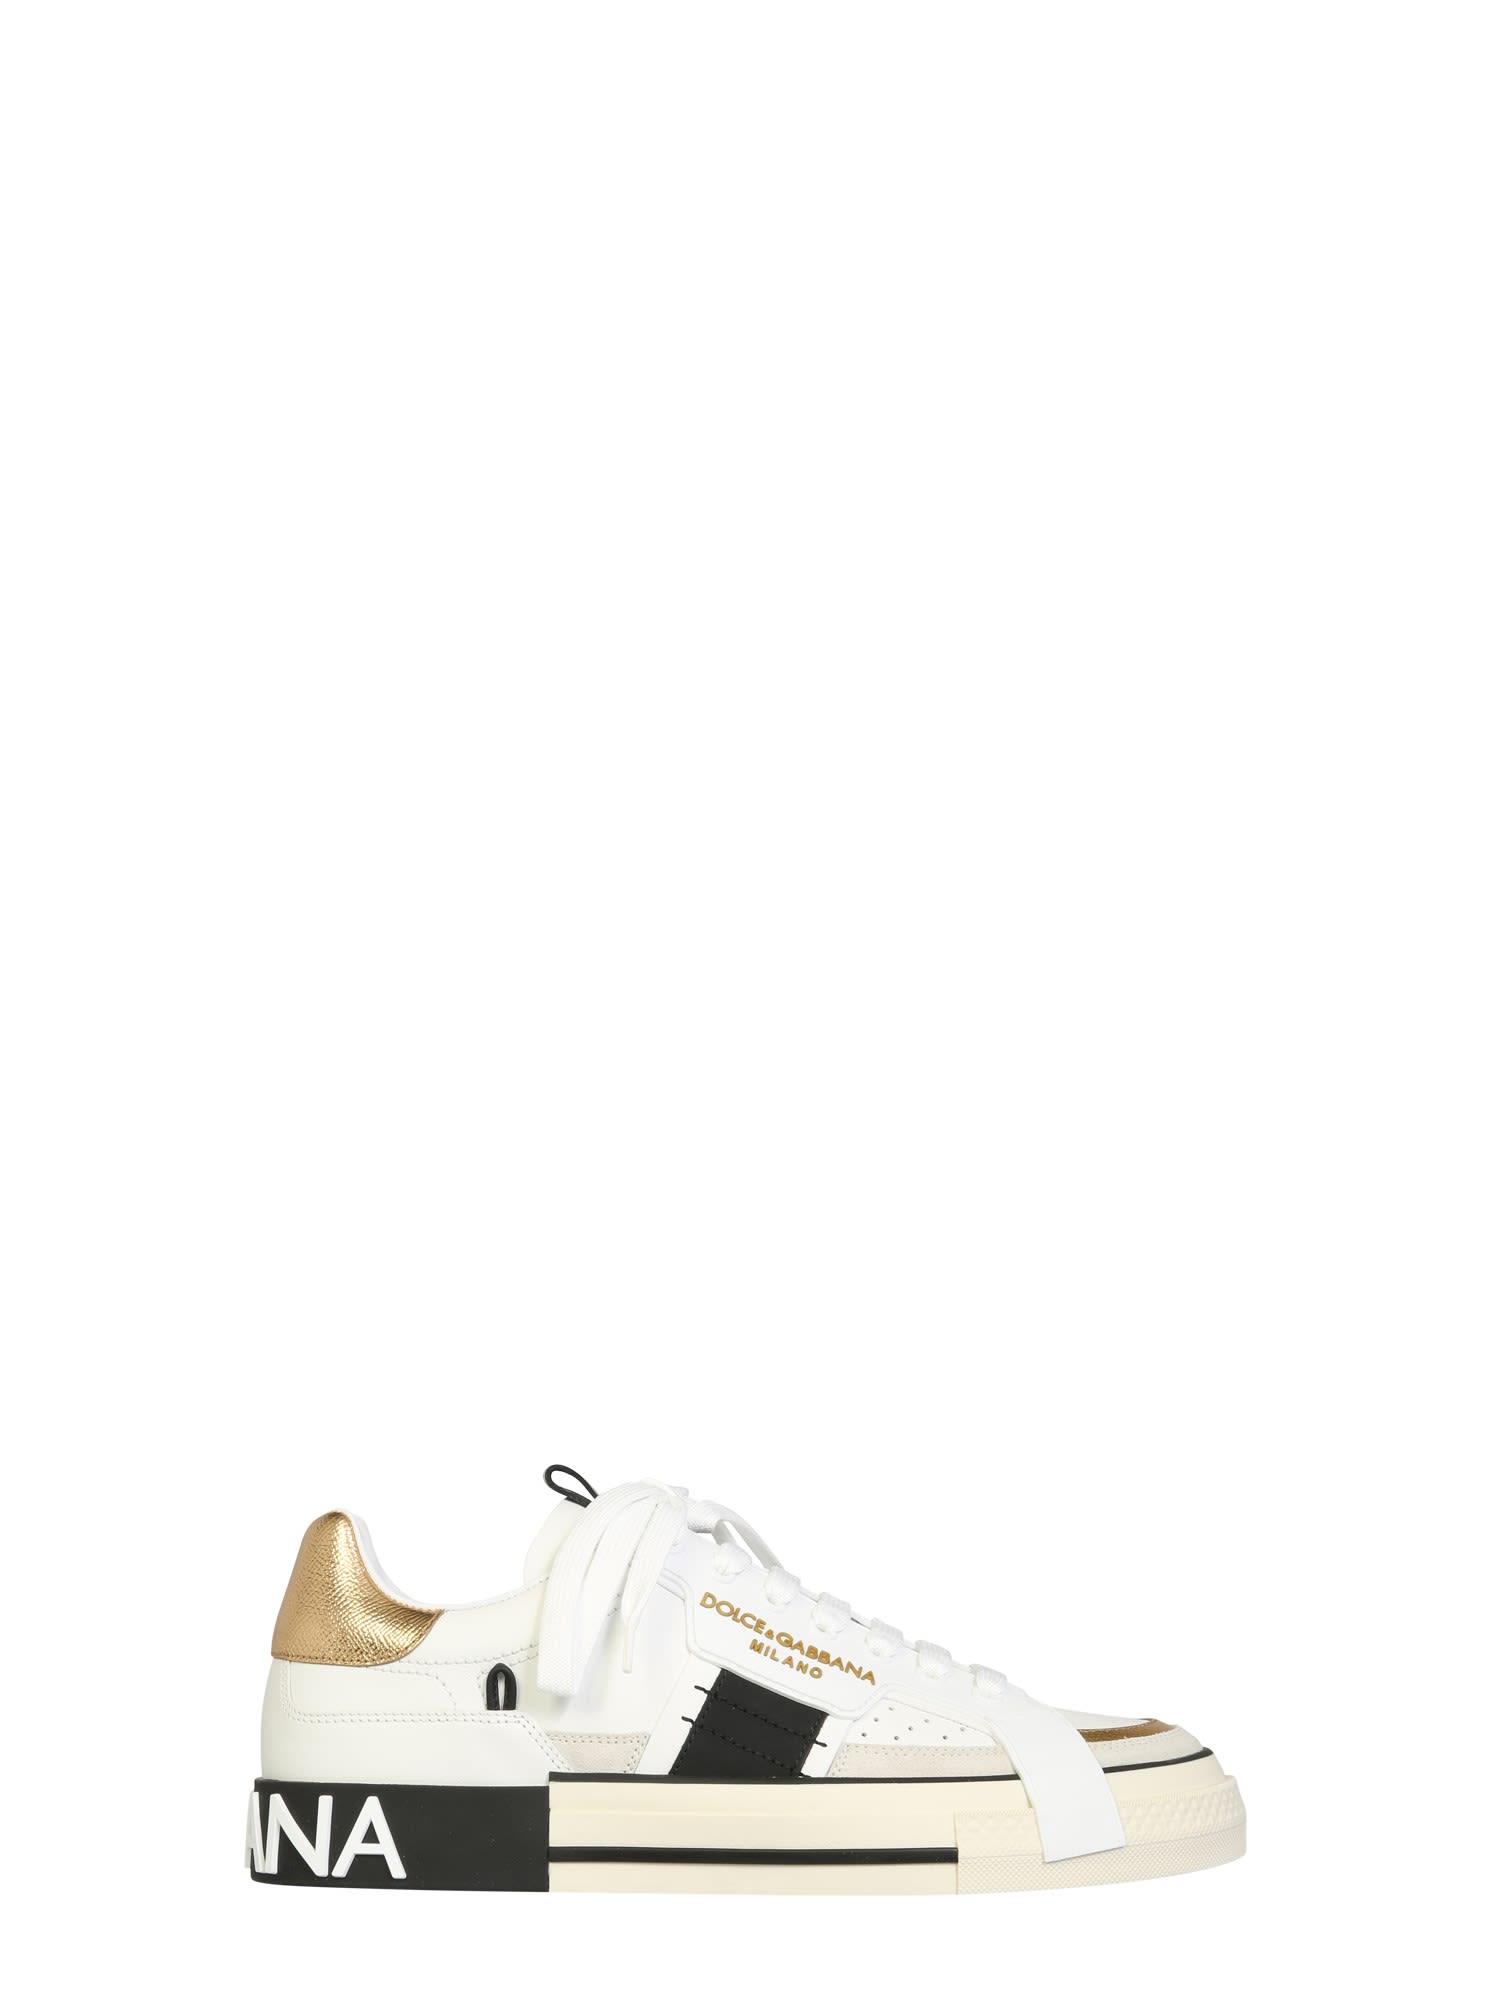 Dolce & Gabbana 2.zero Custom Sneakers